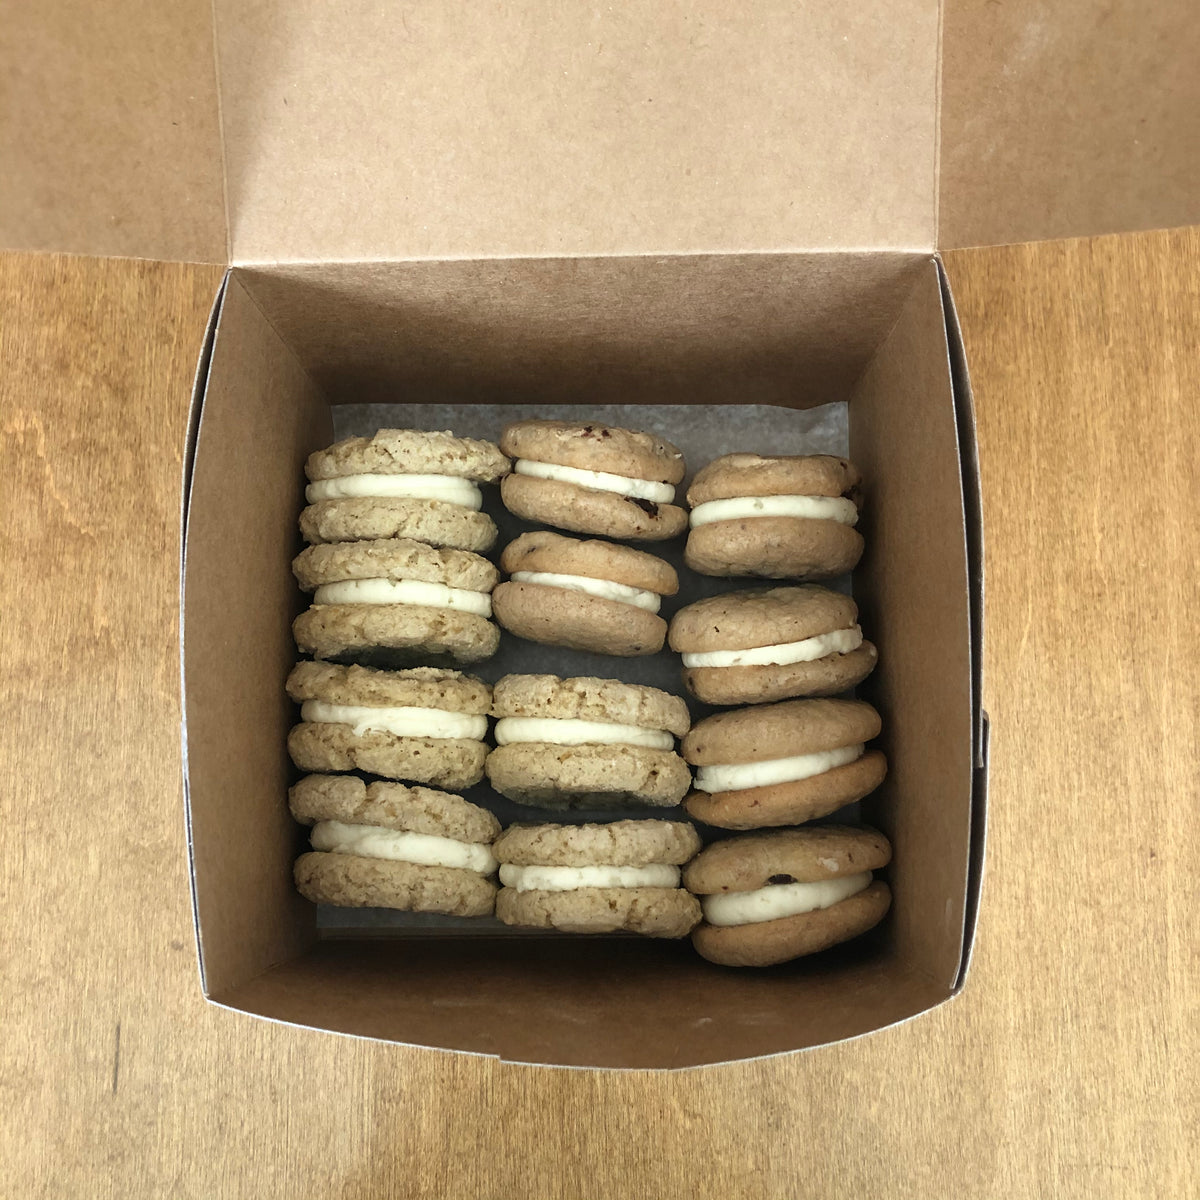 box of cookies walmart